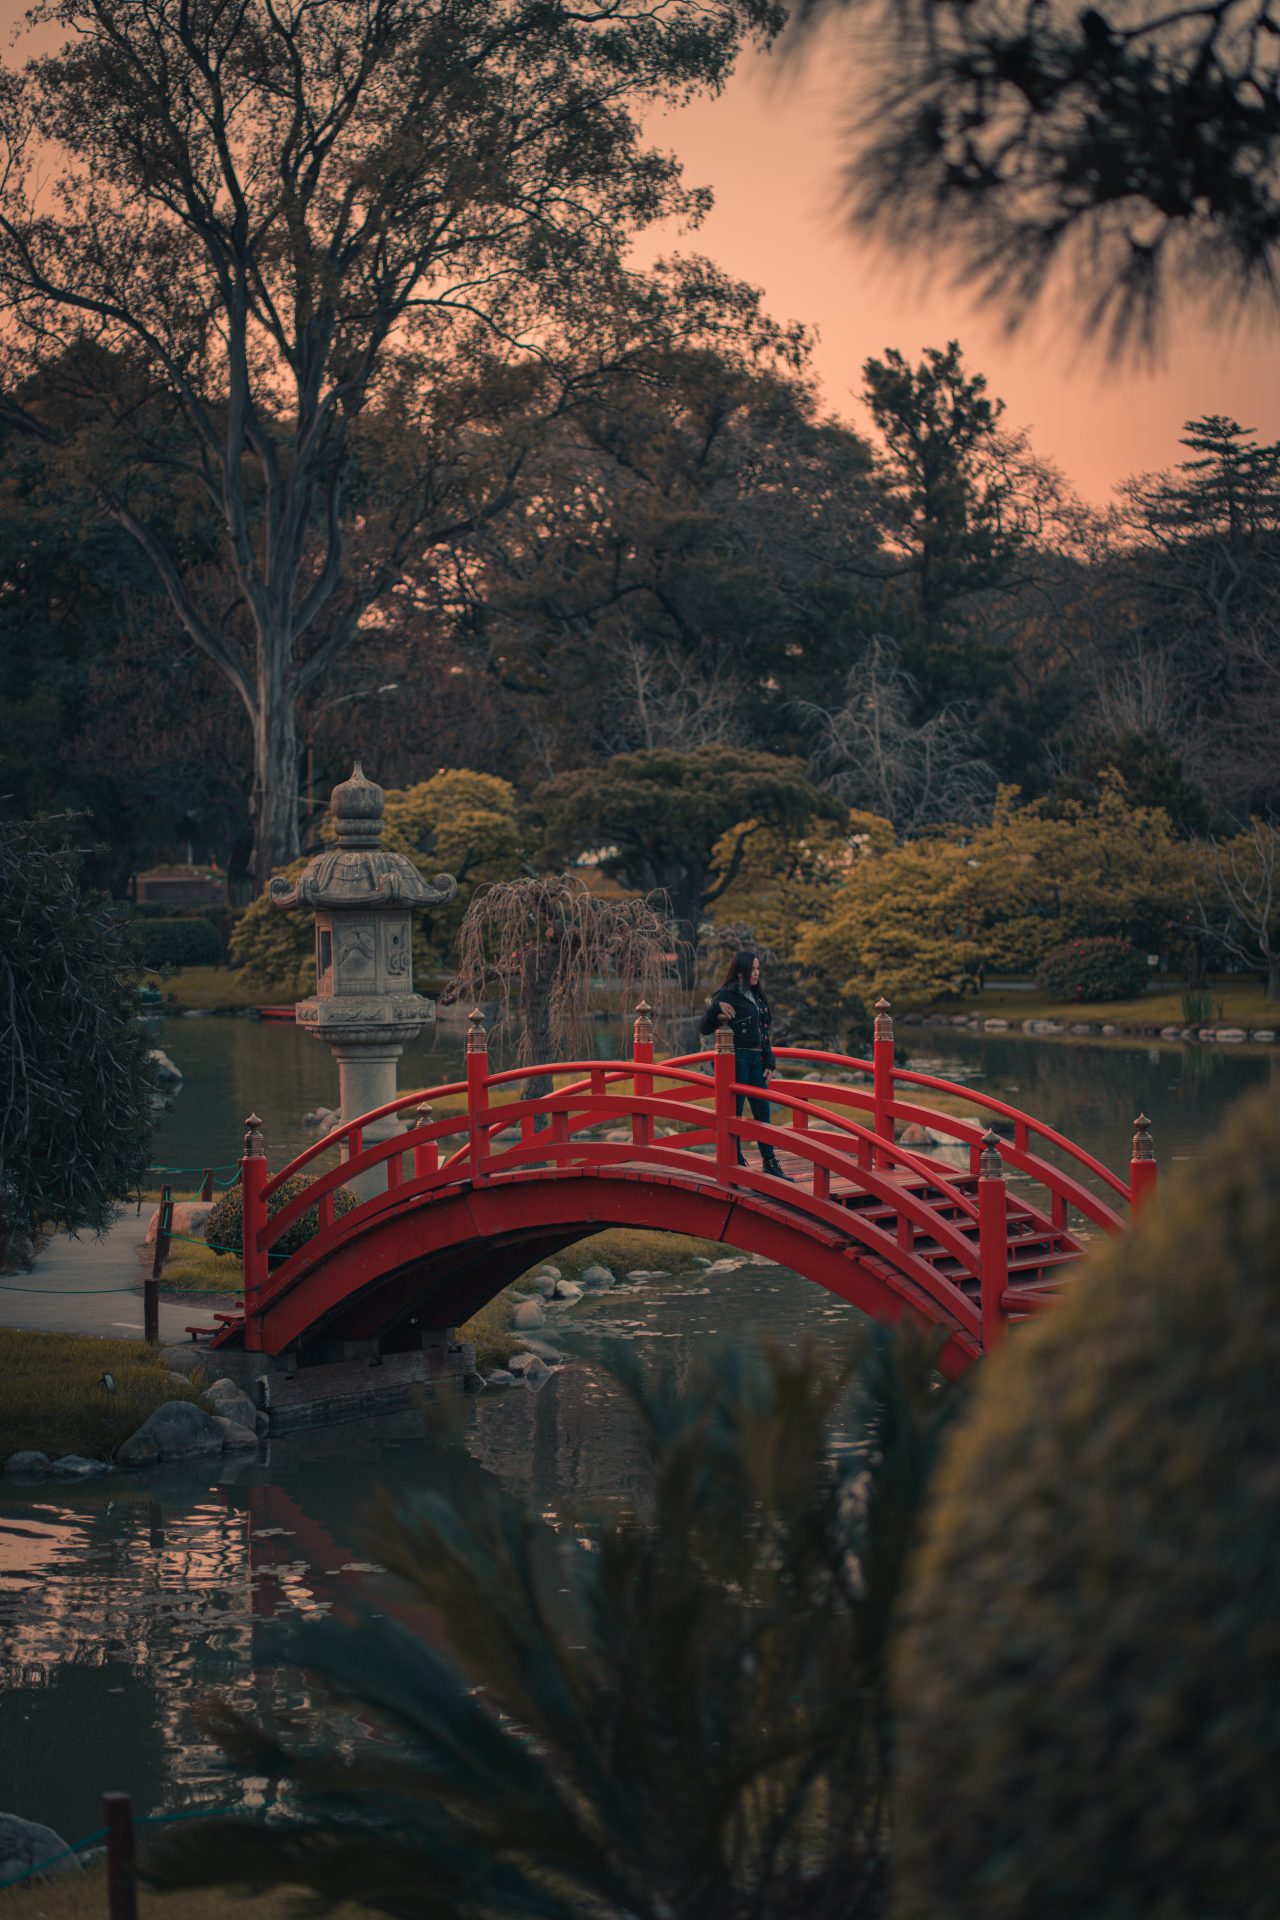 red arch bridge in a peaceful garden